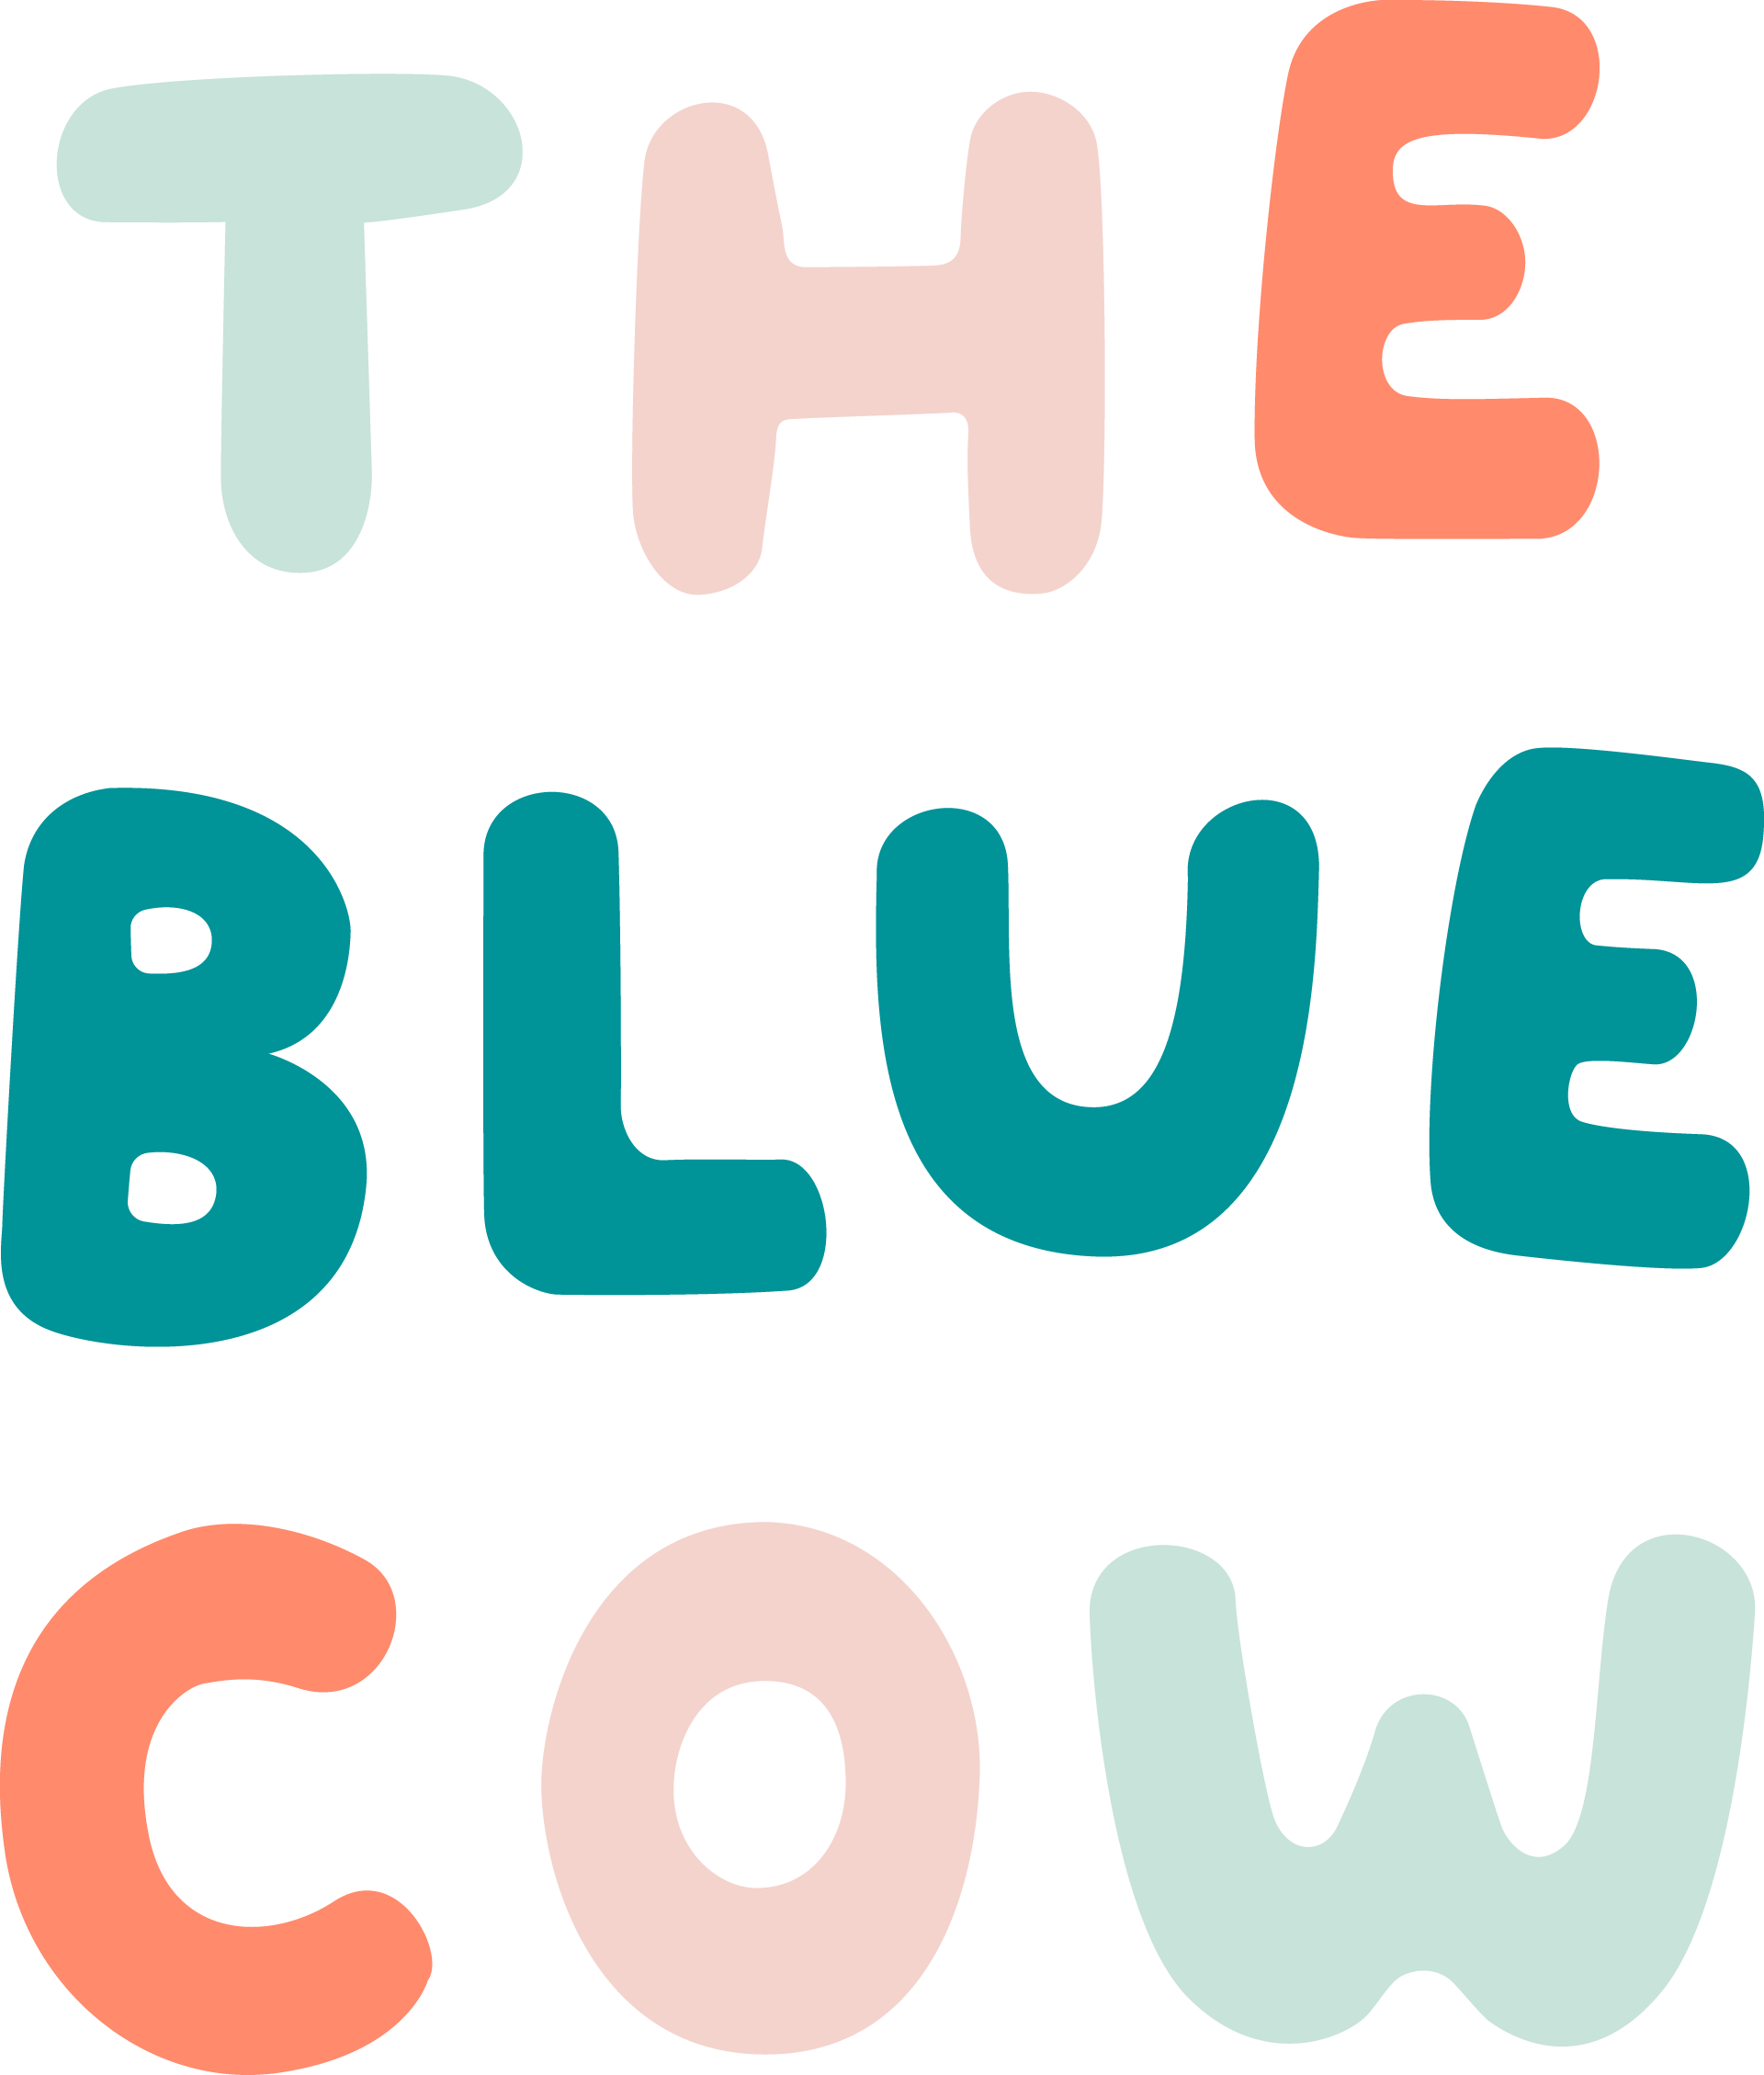 The Blue Cow Logo in multicolour